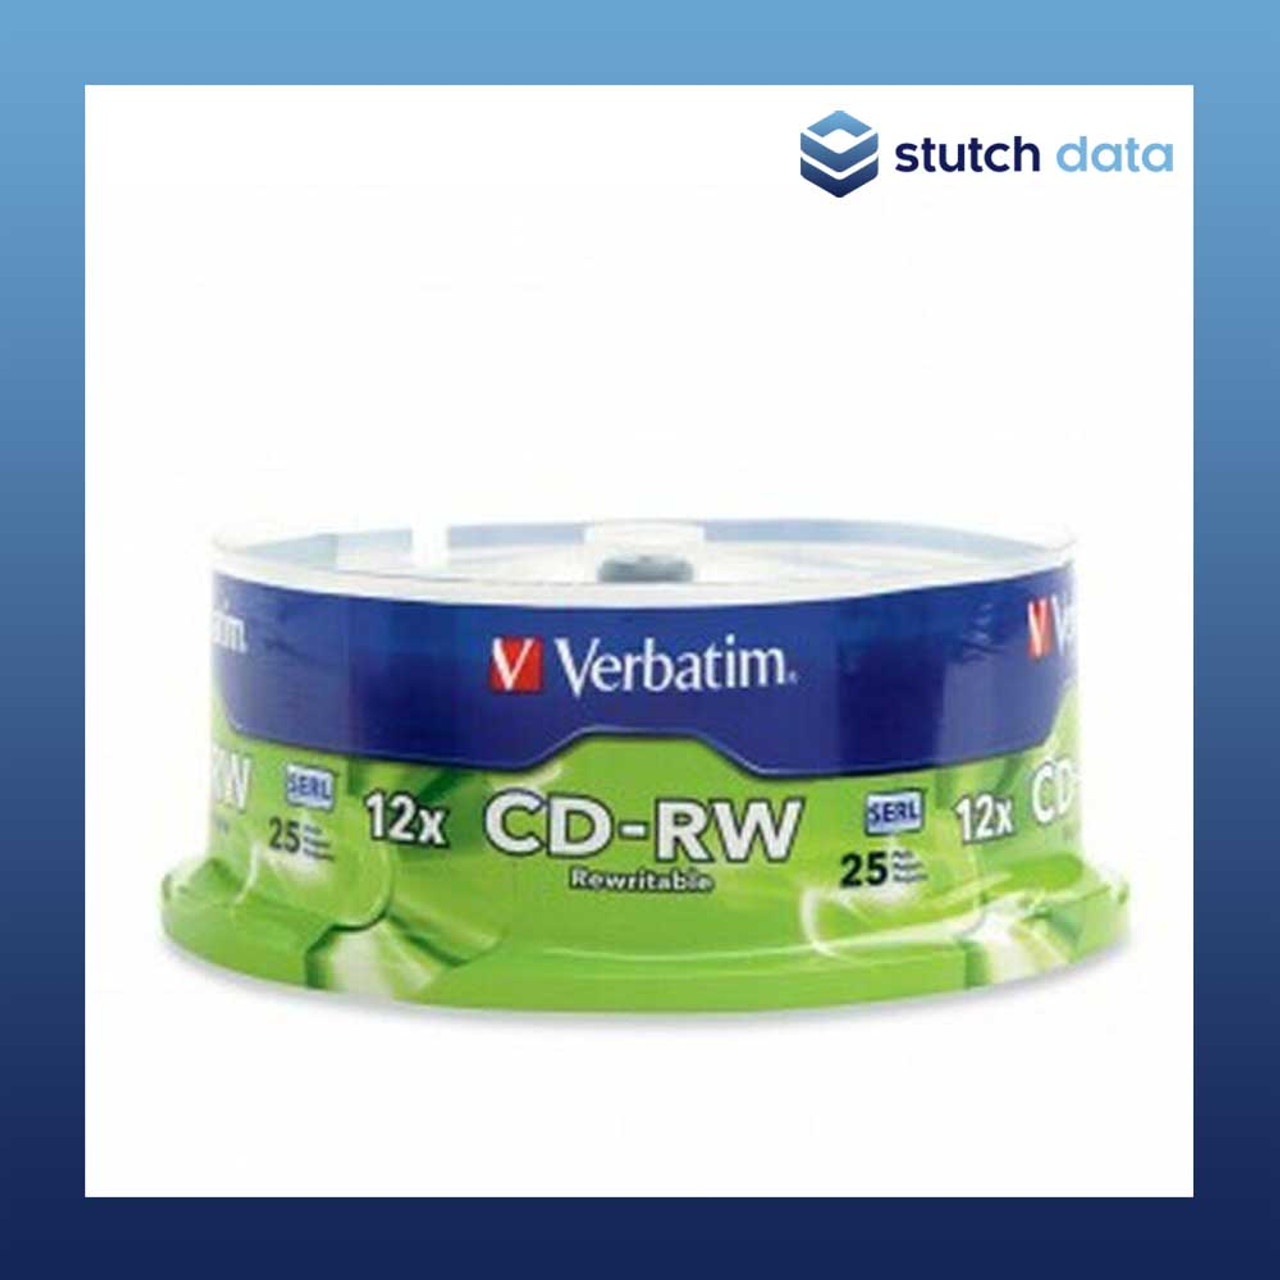  Verbatim CD-RW 700MB 2X-12X Rewritable Media Disc - 25